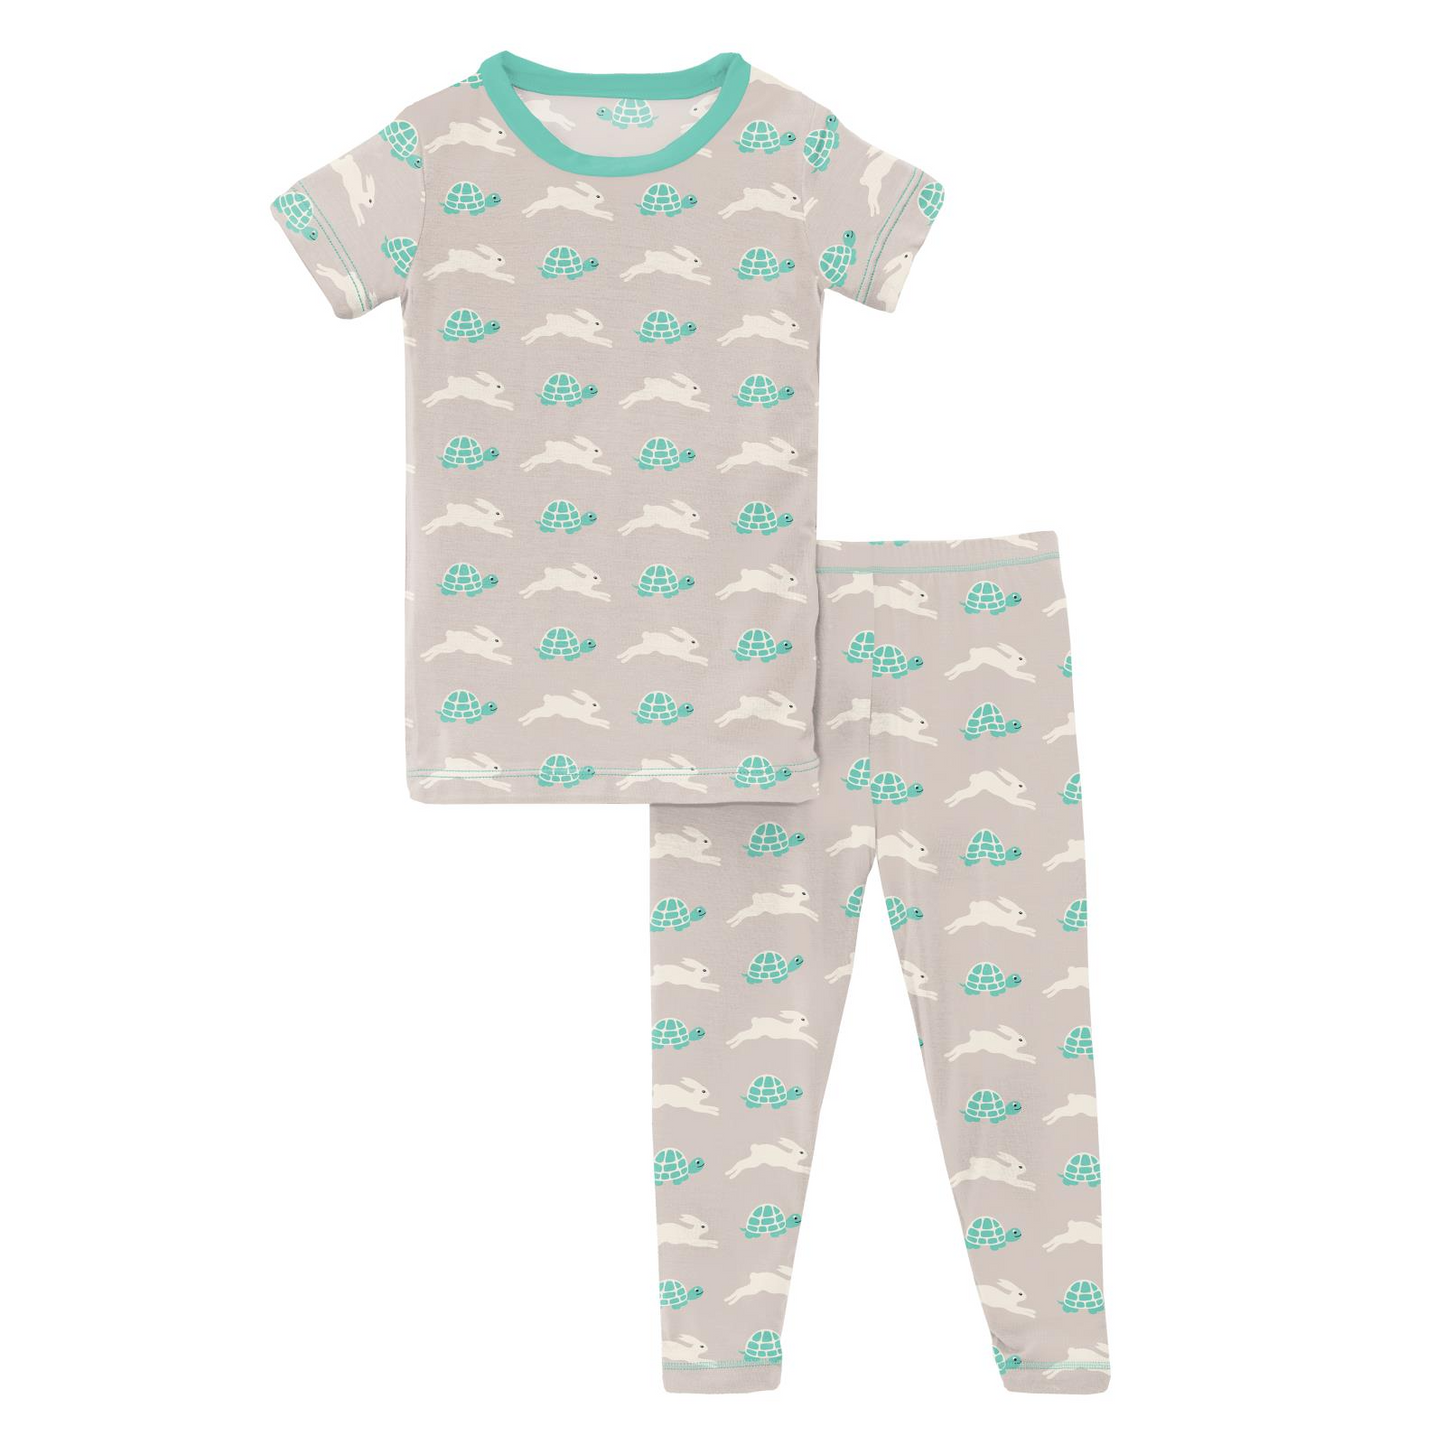 Bamboo Print Short Sleeve Pajama Set: Latte Tortoise and Hare